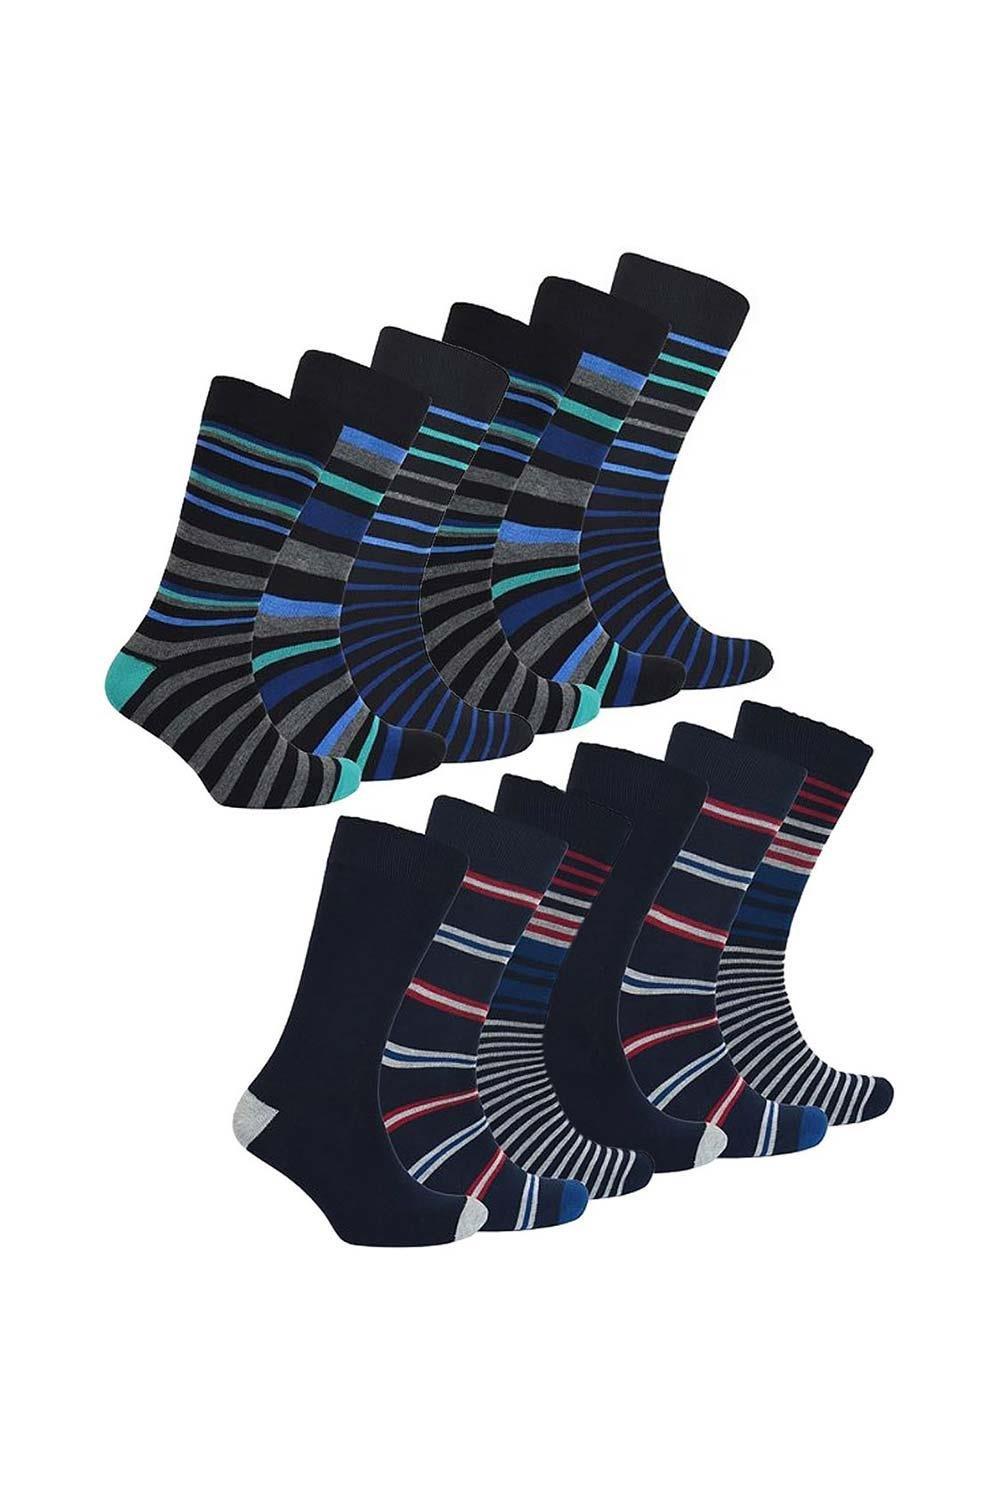 12 Pair Novelty Multicolour Funny Design Cushioned Bamboo Crew Socks